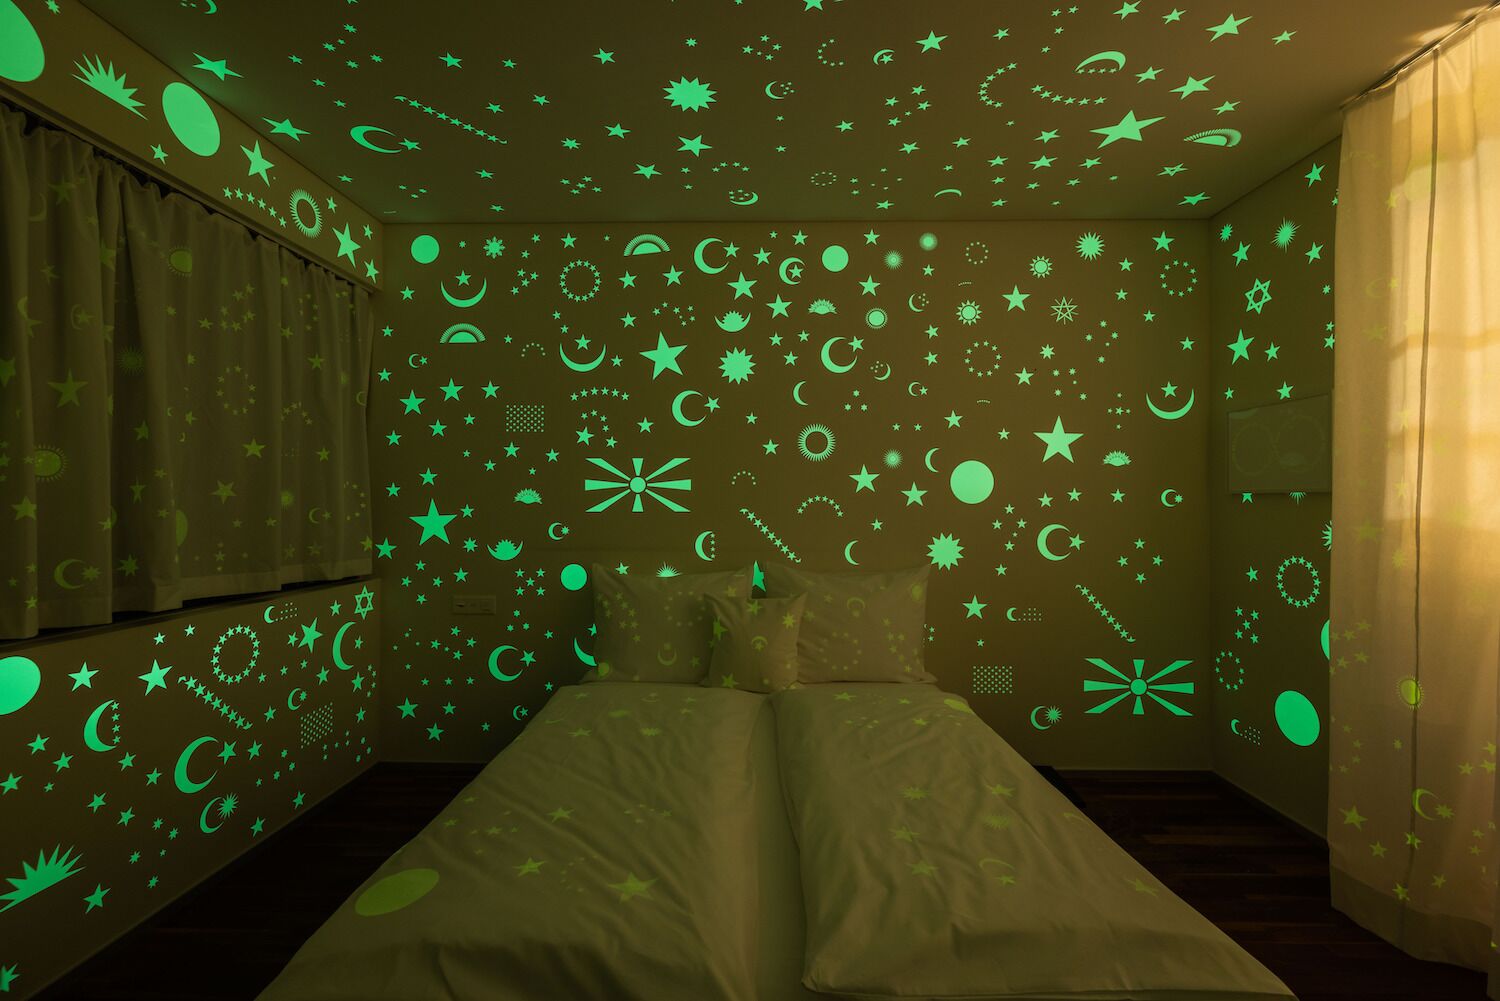 Pop-up hotel room in Zurich Switzerland decorated with glow-in-the-dark celestial bodies